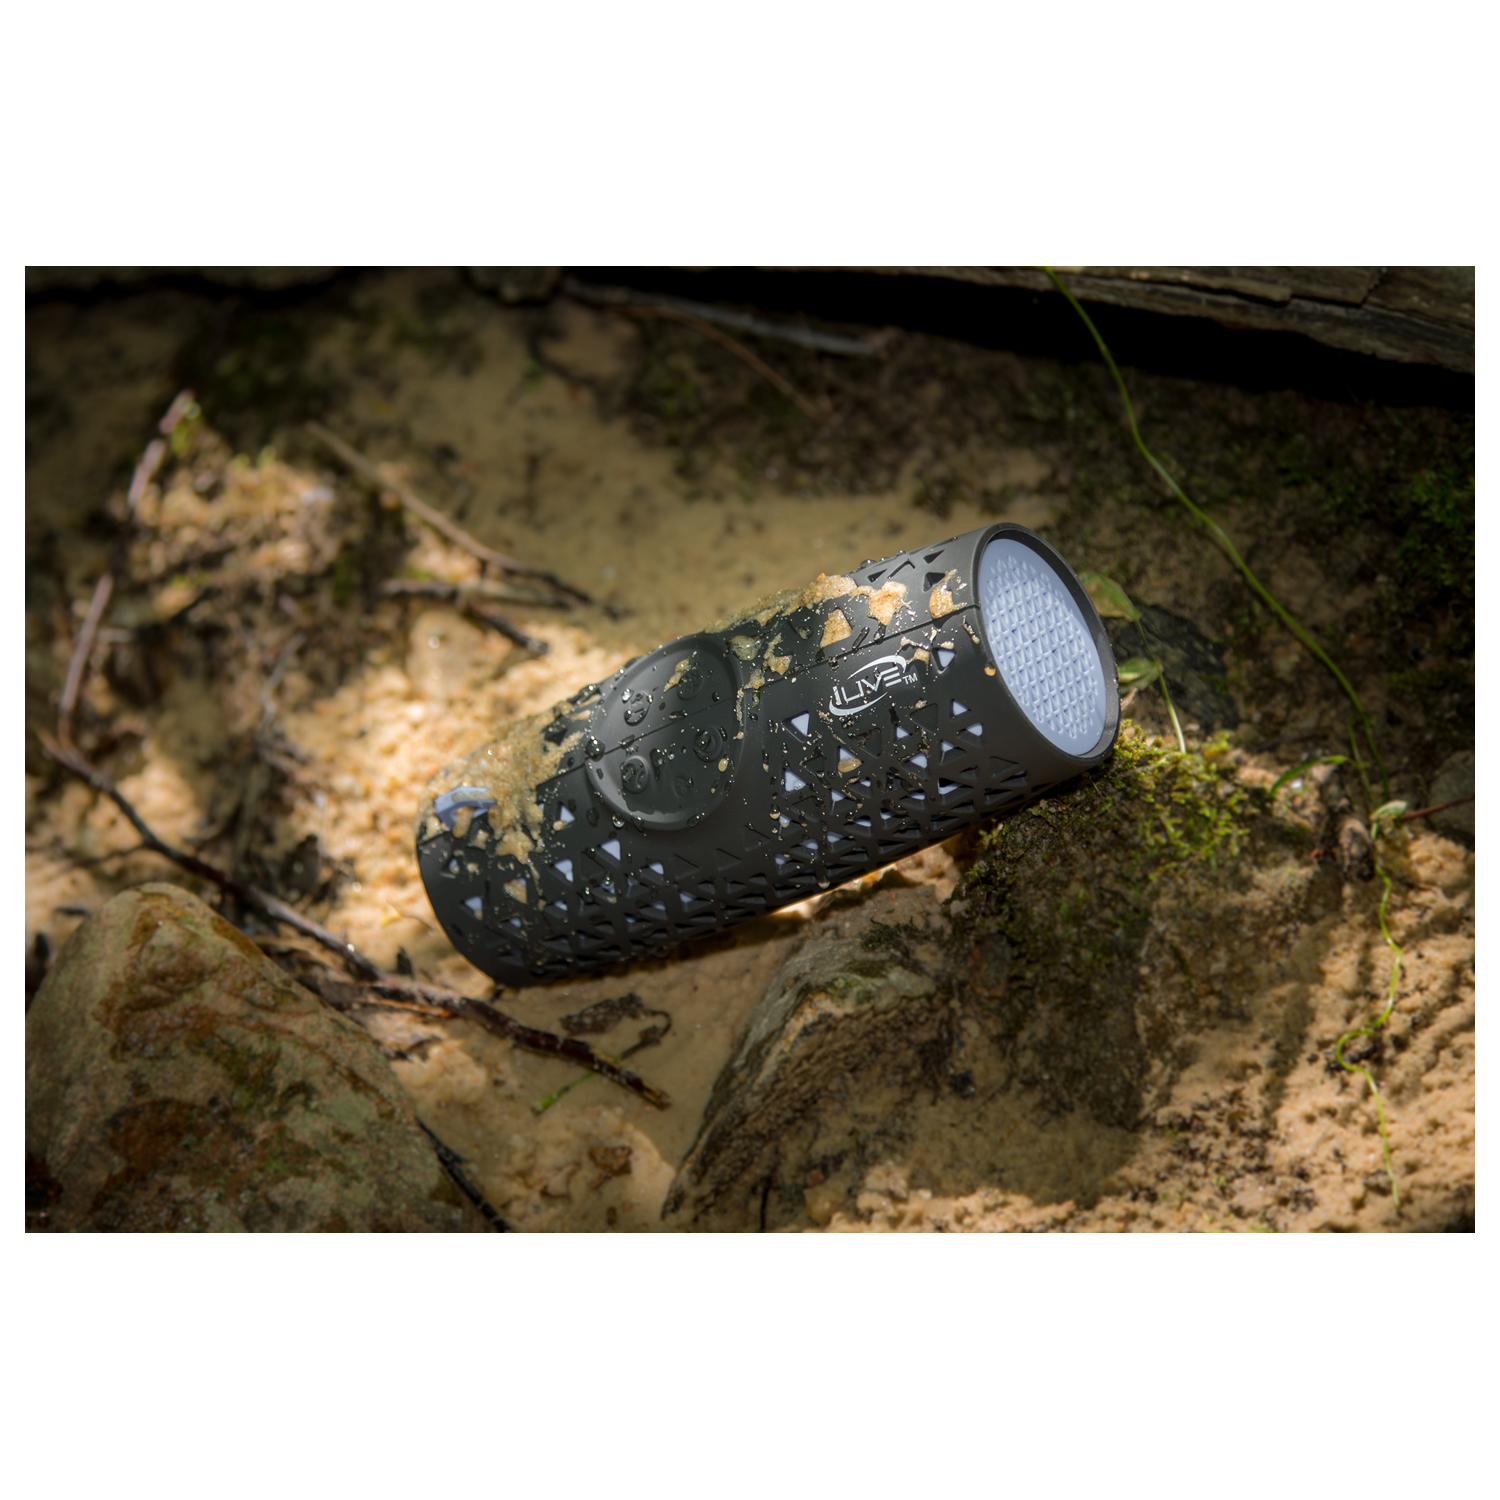 iLive Waterproof Portable BluetoothWireless Speaker, ISBW337B, Black - image 5 of 7